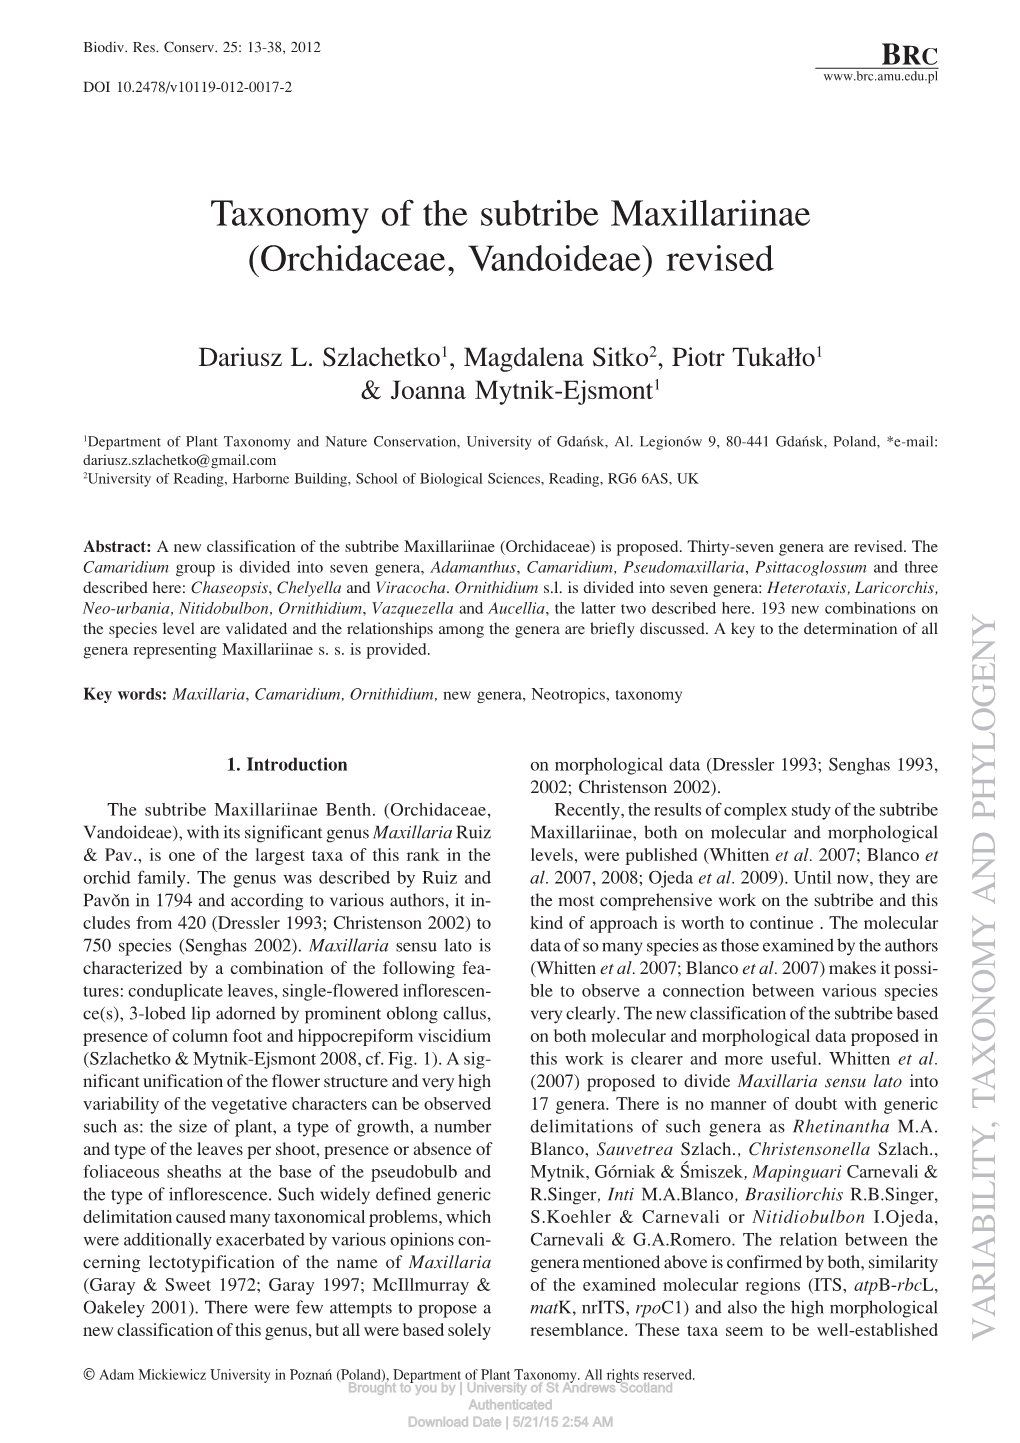 Taxonomy of the Subtribe Maxillariinae (Orchidaceae, Vandoideae) Revised